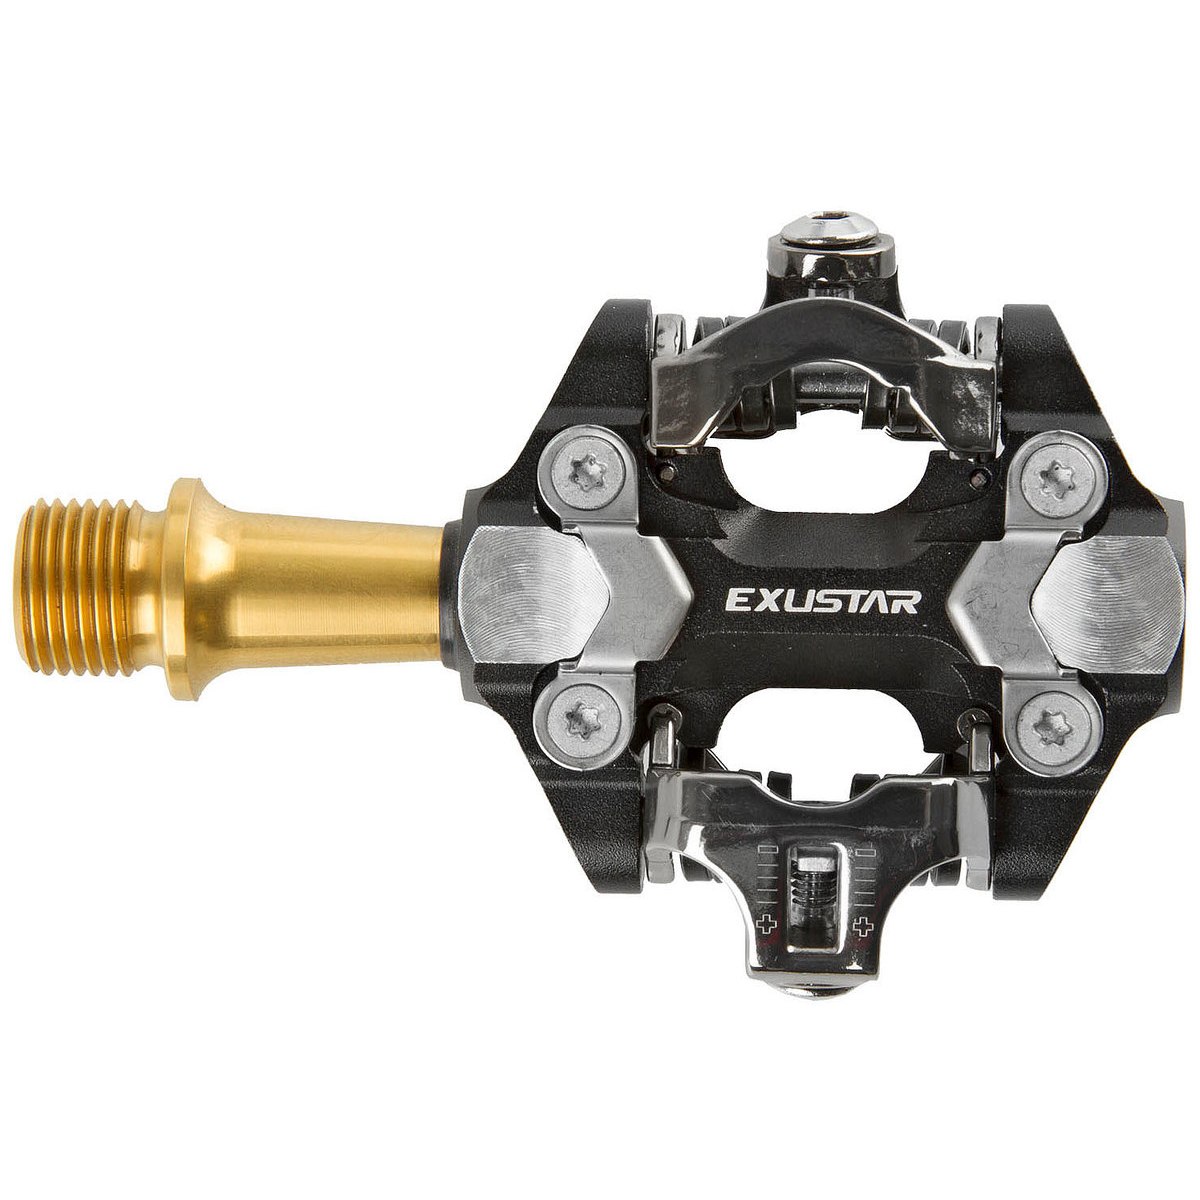 Productfoto van Exustar E-PM222TI Pedal